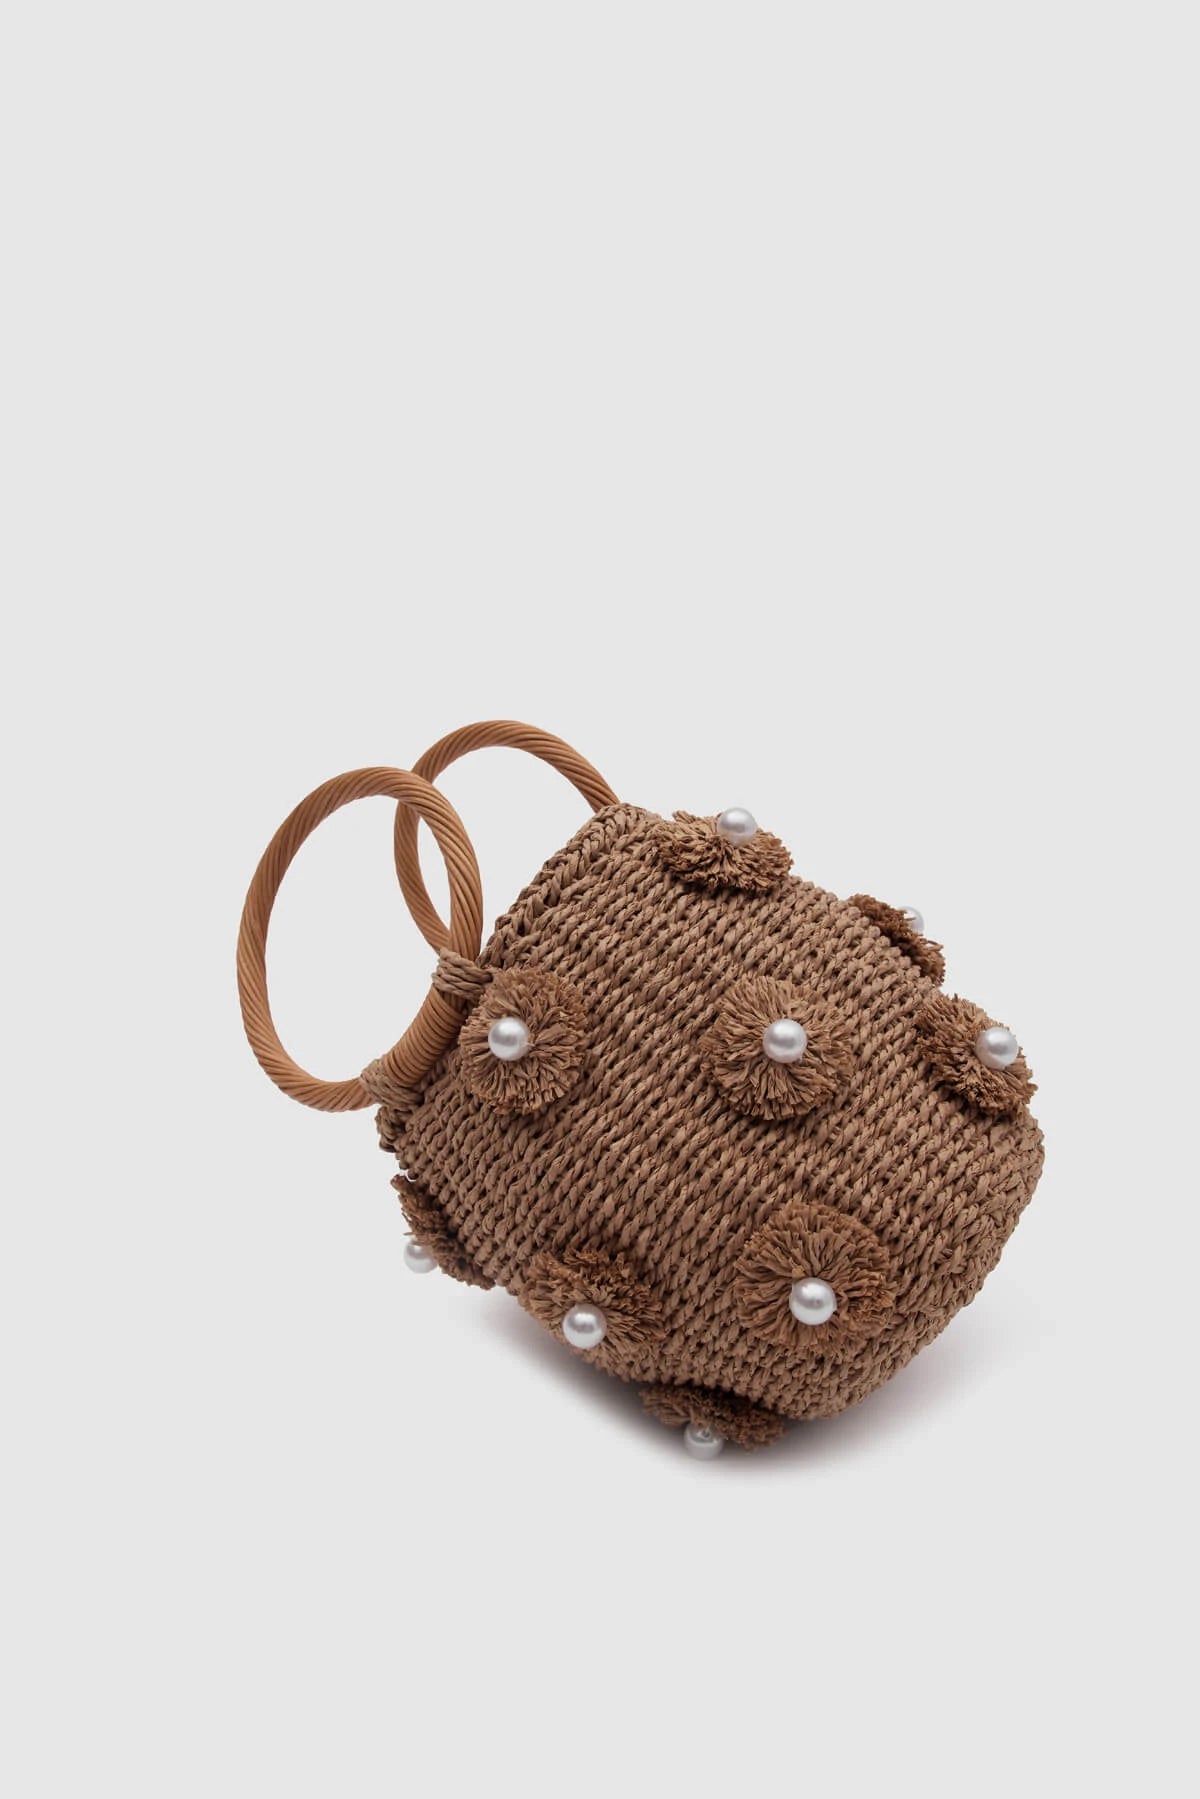 Wooden Handle Basket Straw Bag straw bags LUNARITY GARAGE   